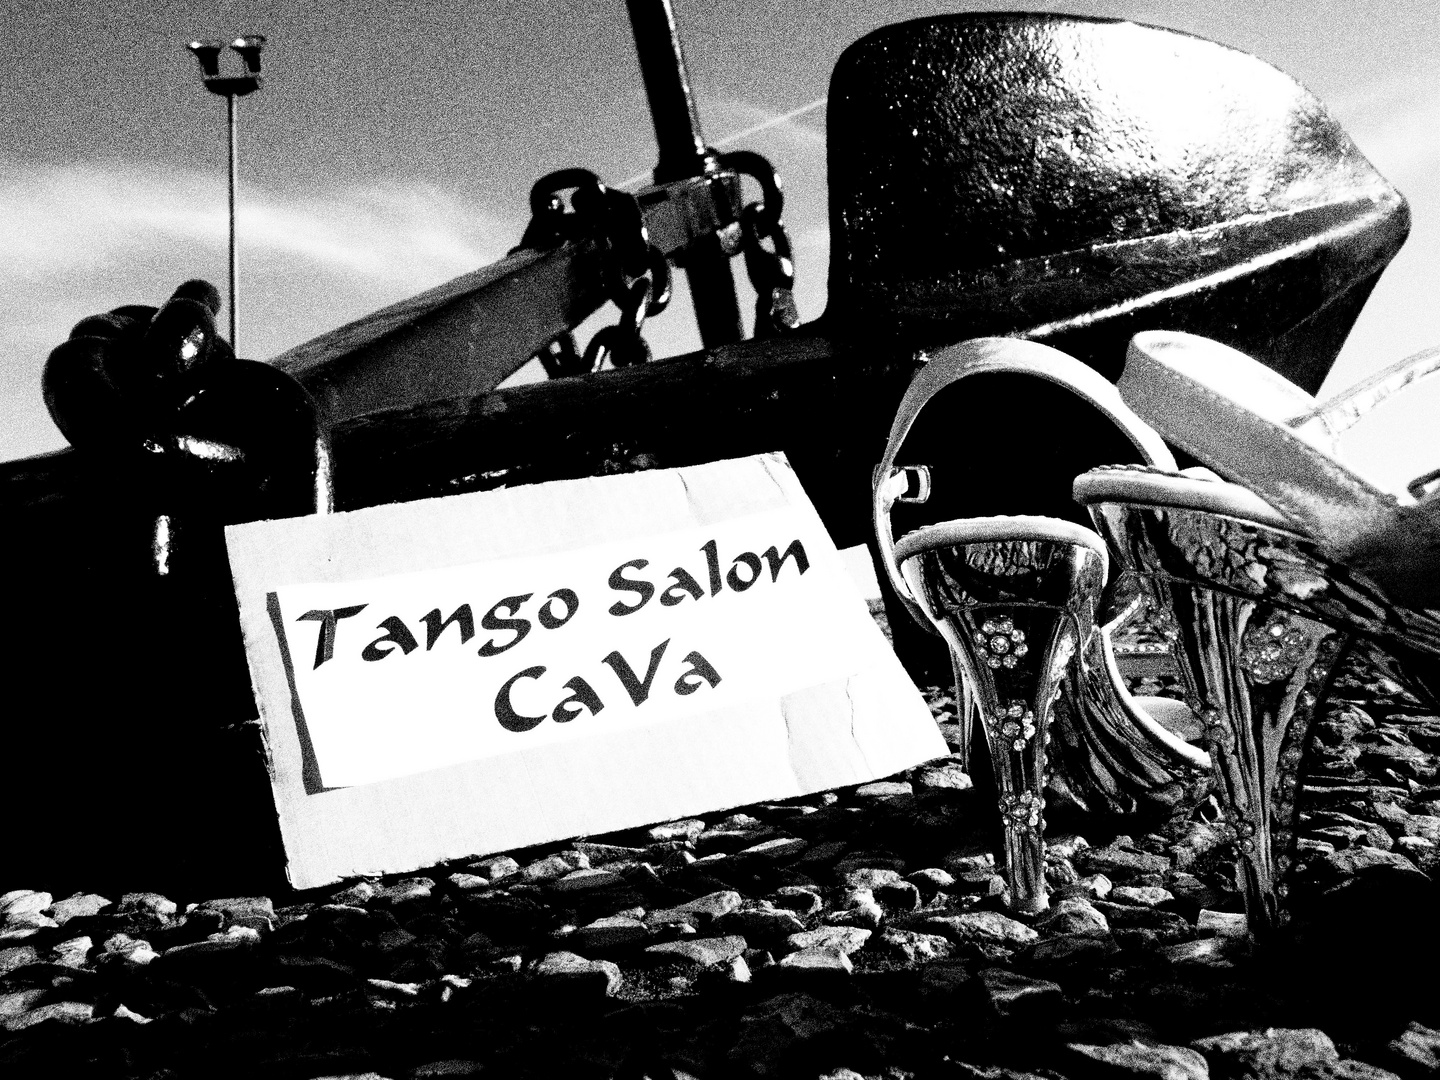 Tango Salon "CaVa" 3